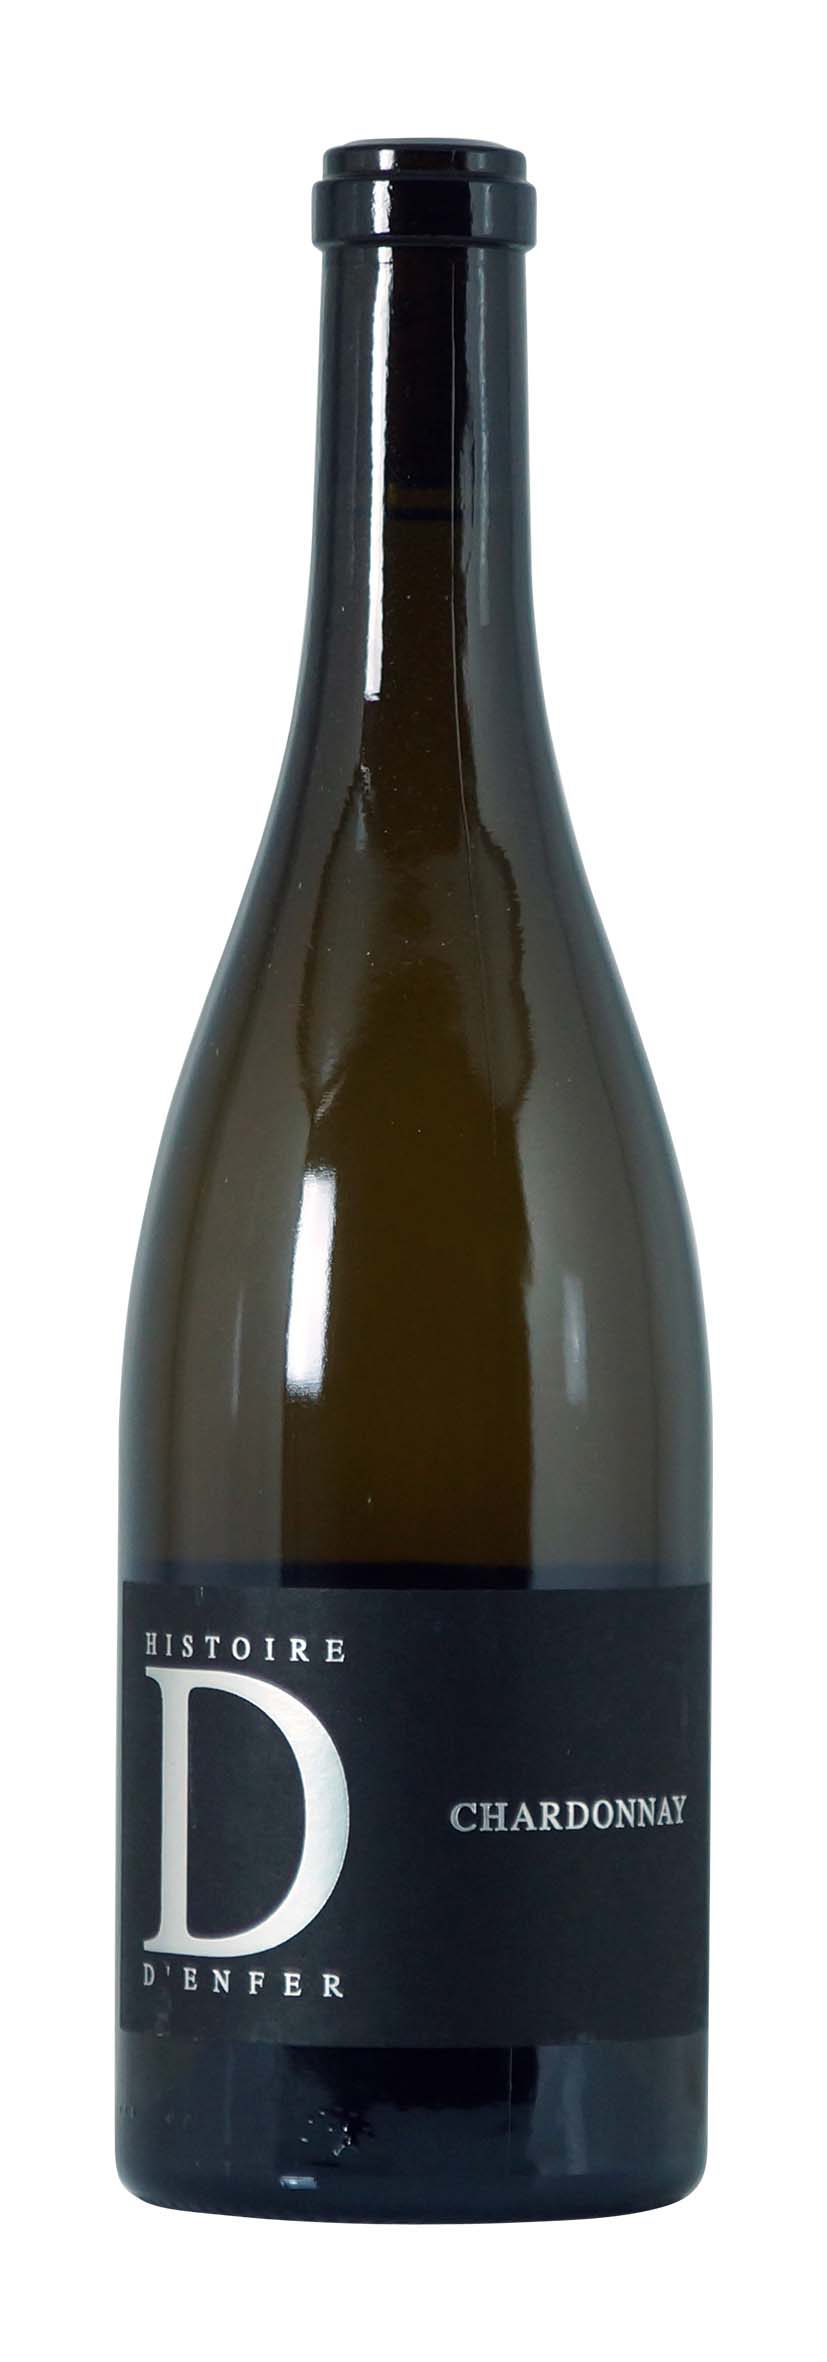 Valais AOC Chardonnay 2012